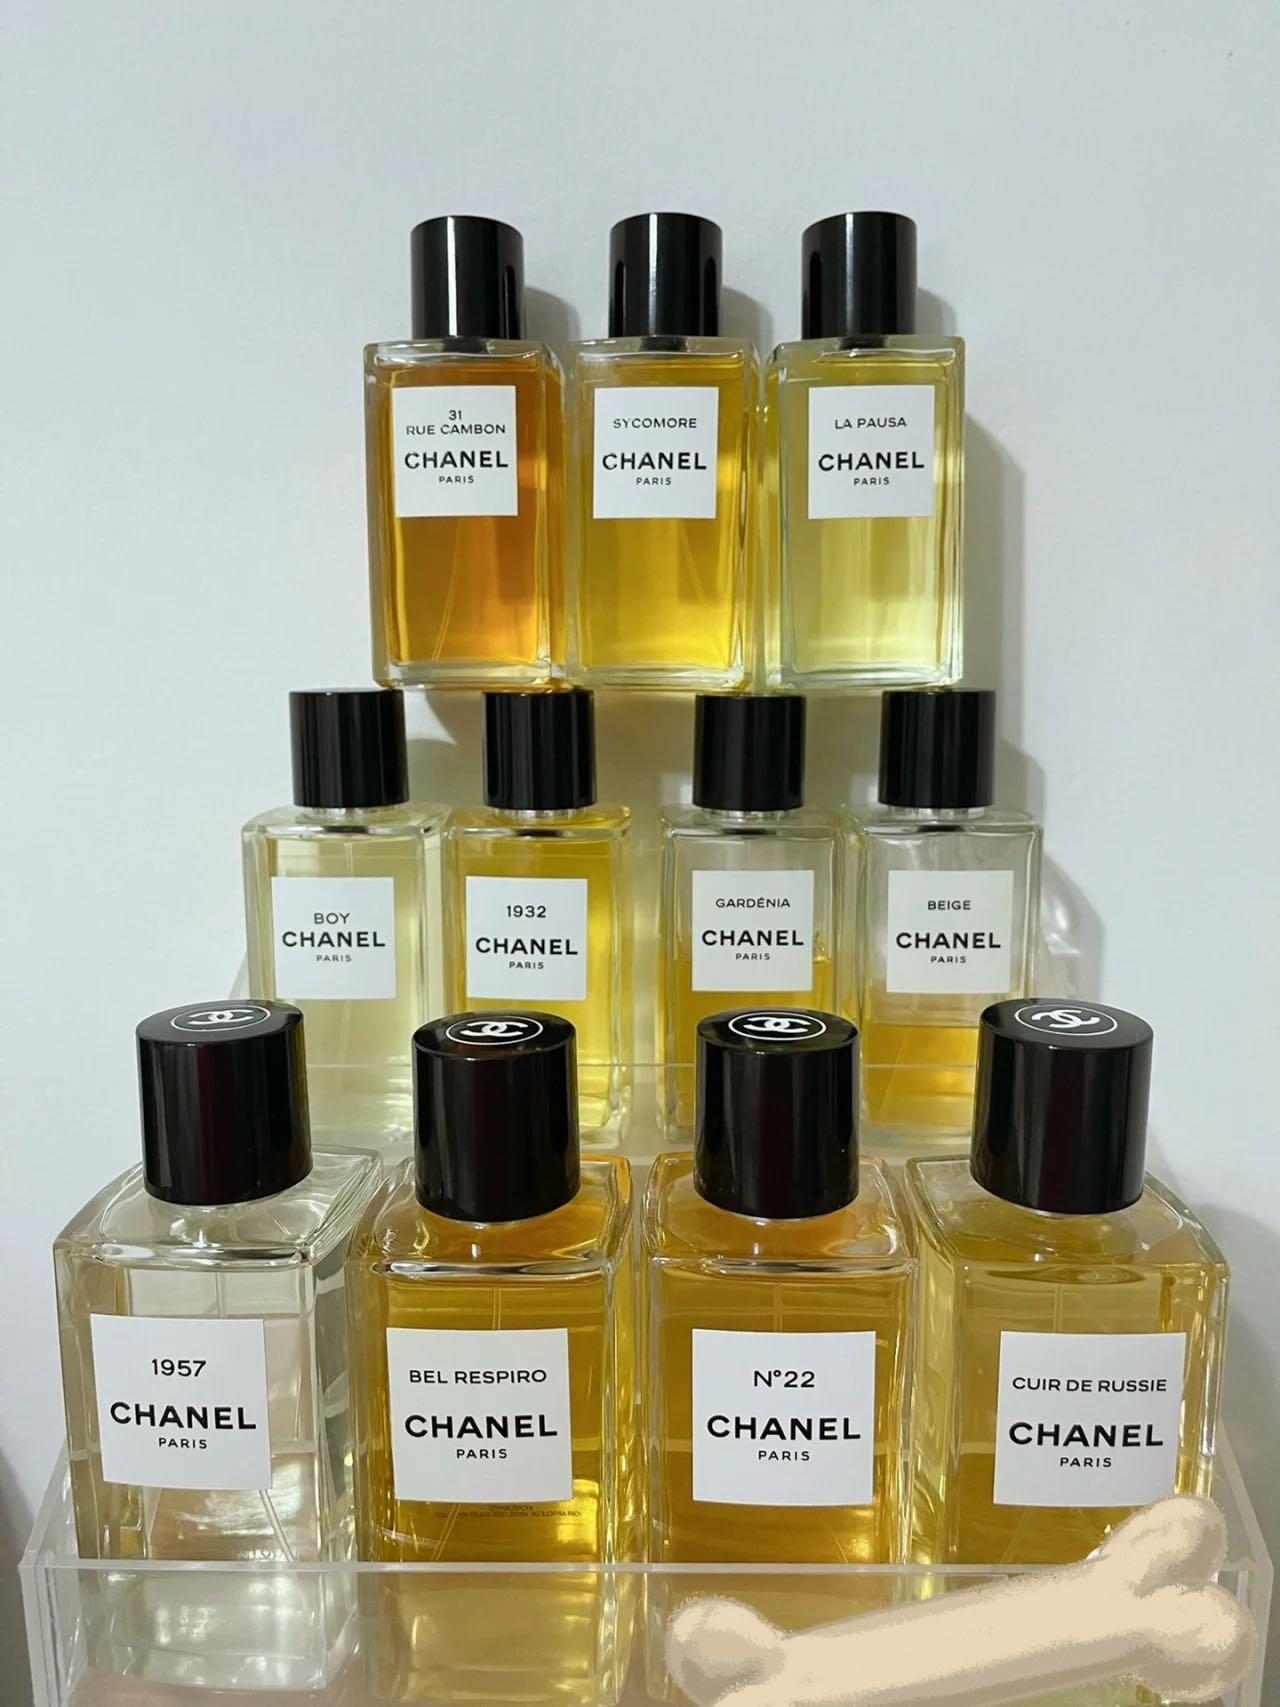 Chanel les exclusifs de Chanel decant, Beauty & Personal Care